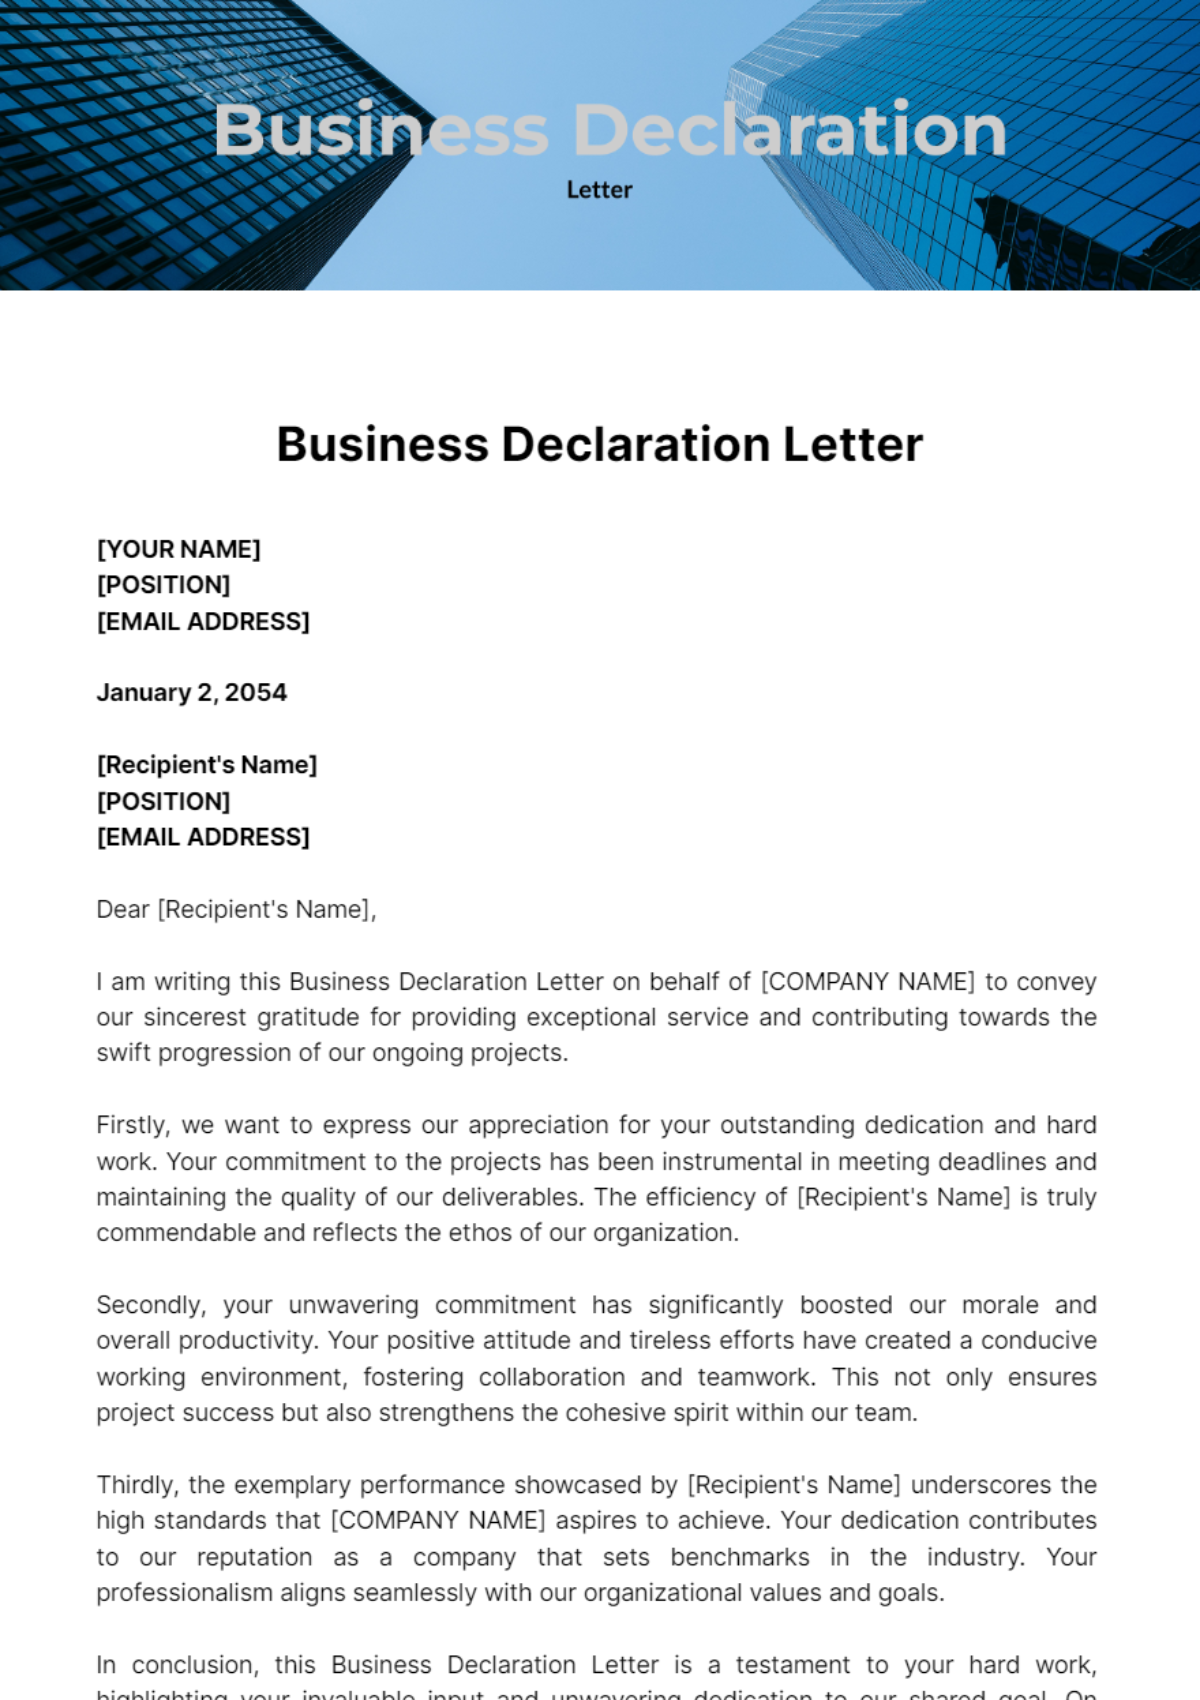 Business Declaration Letter Template